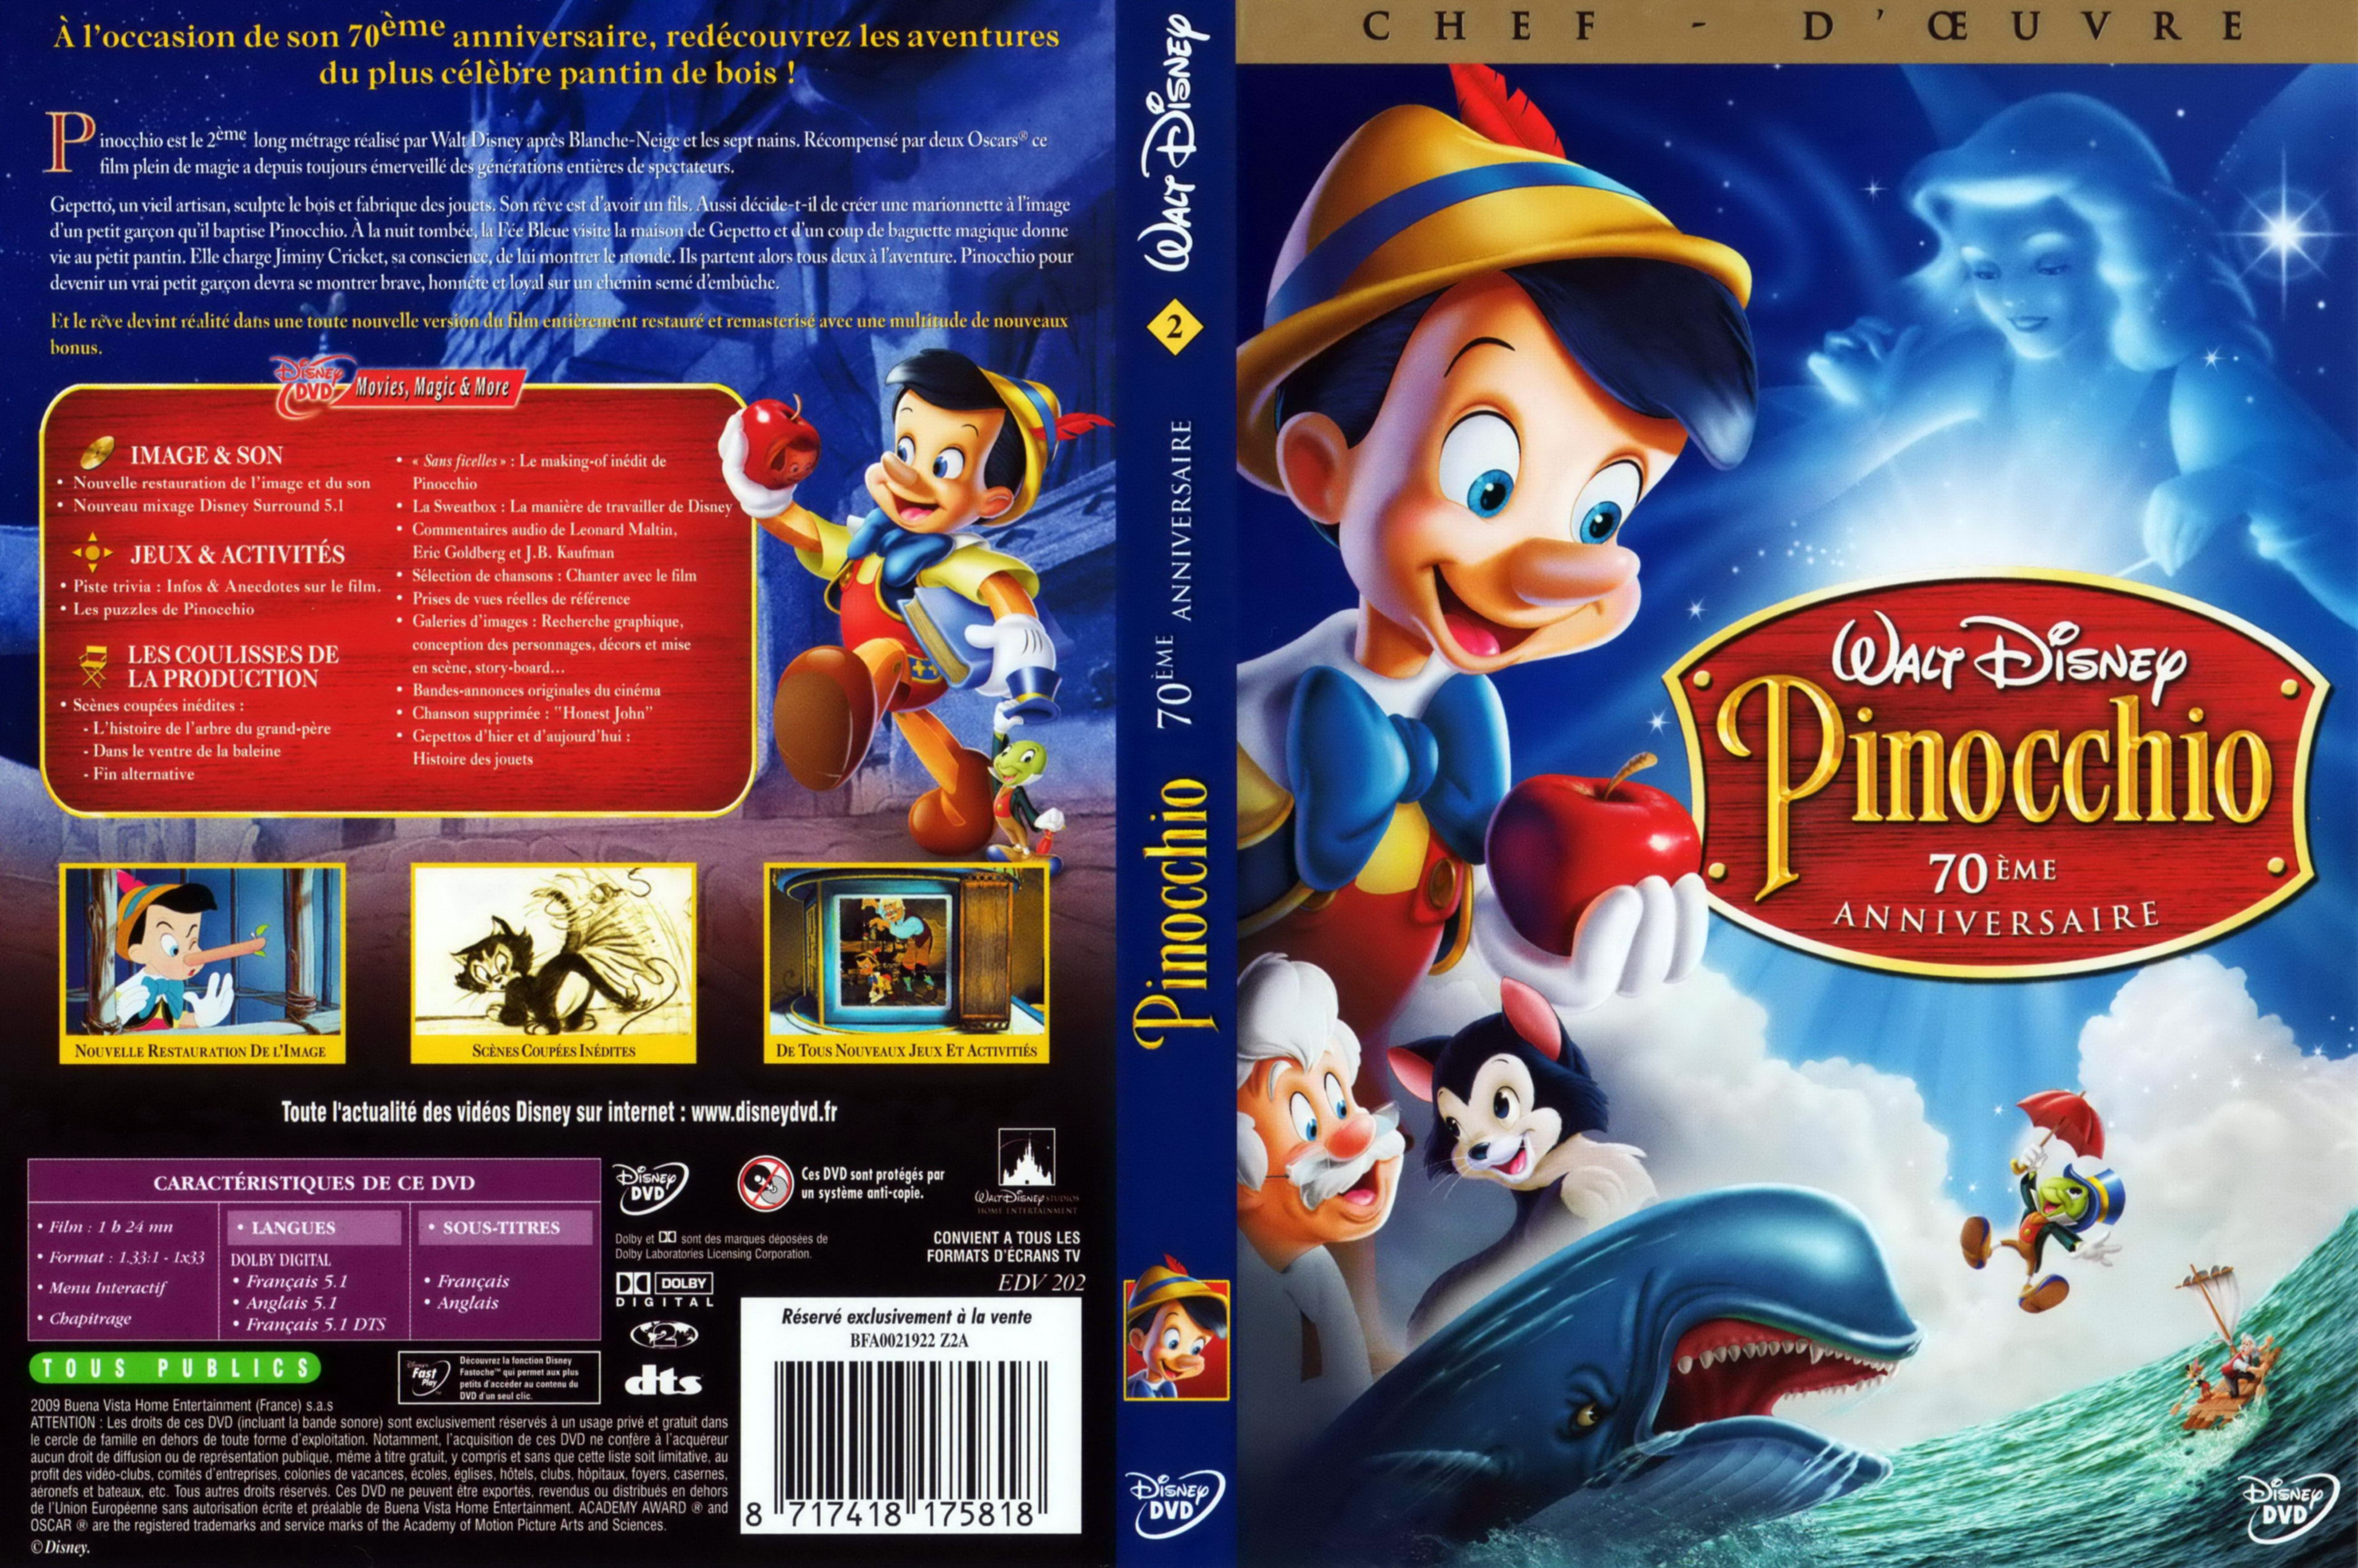 Jaquette DVD Pinocchio v3